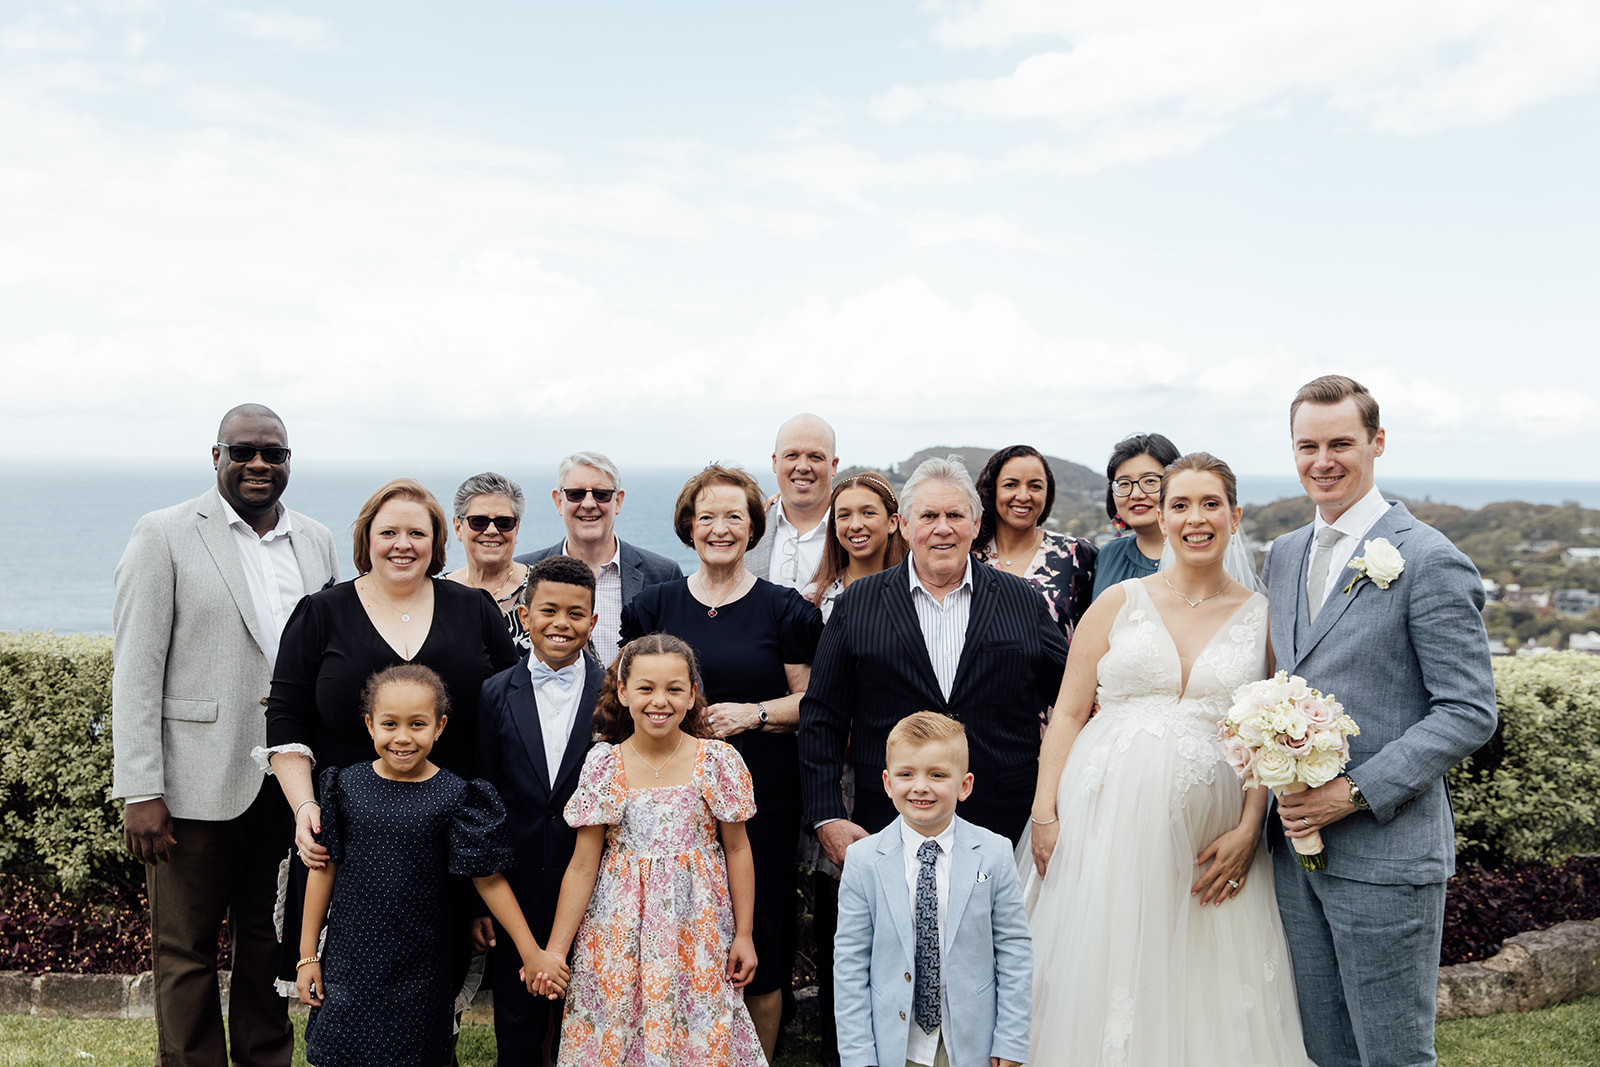 A family photo at a wedding